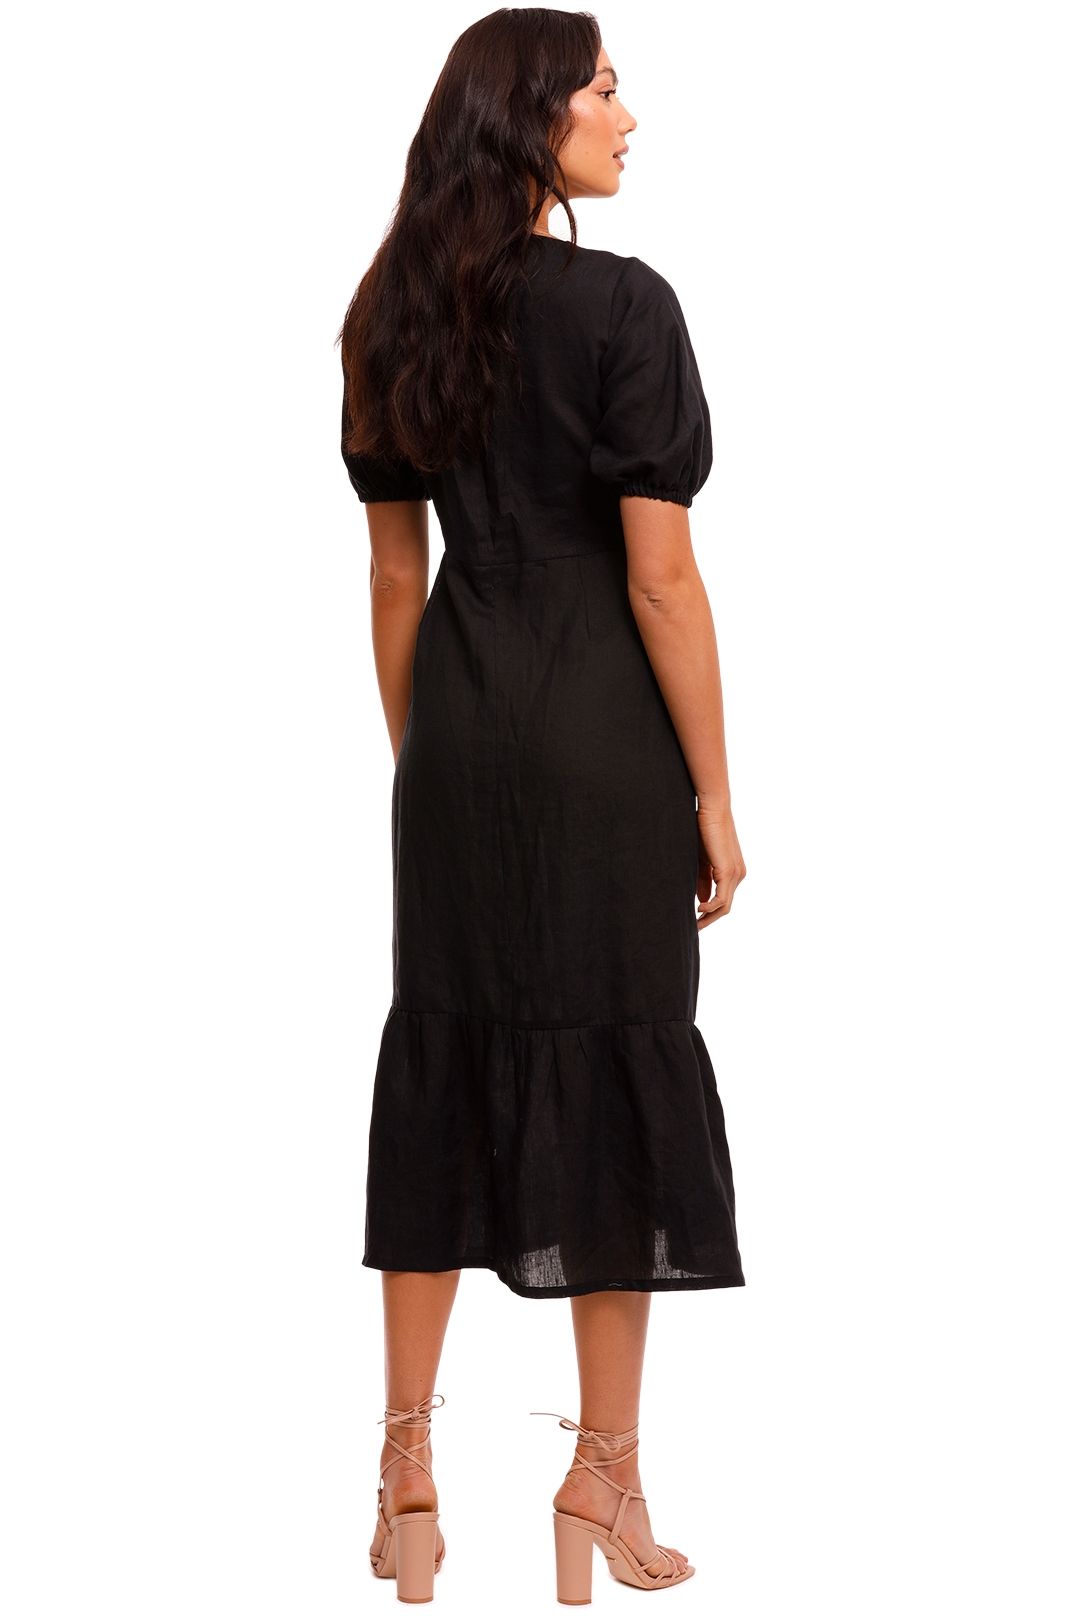 Jillian Boustred Liberty Dress Black Maxi